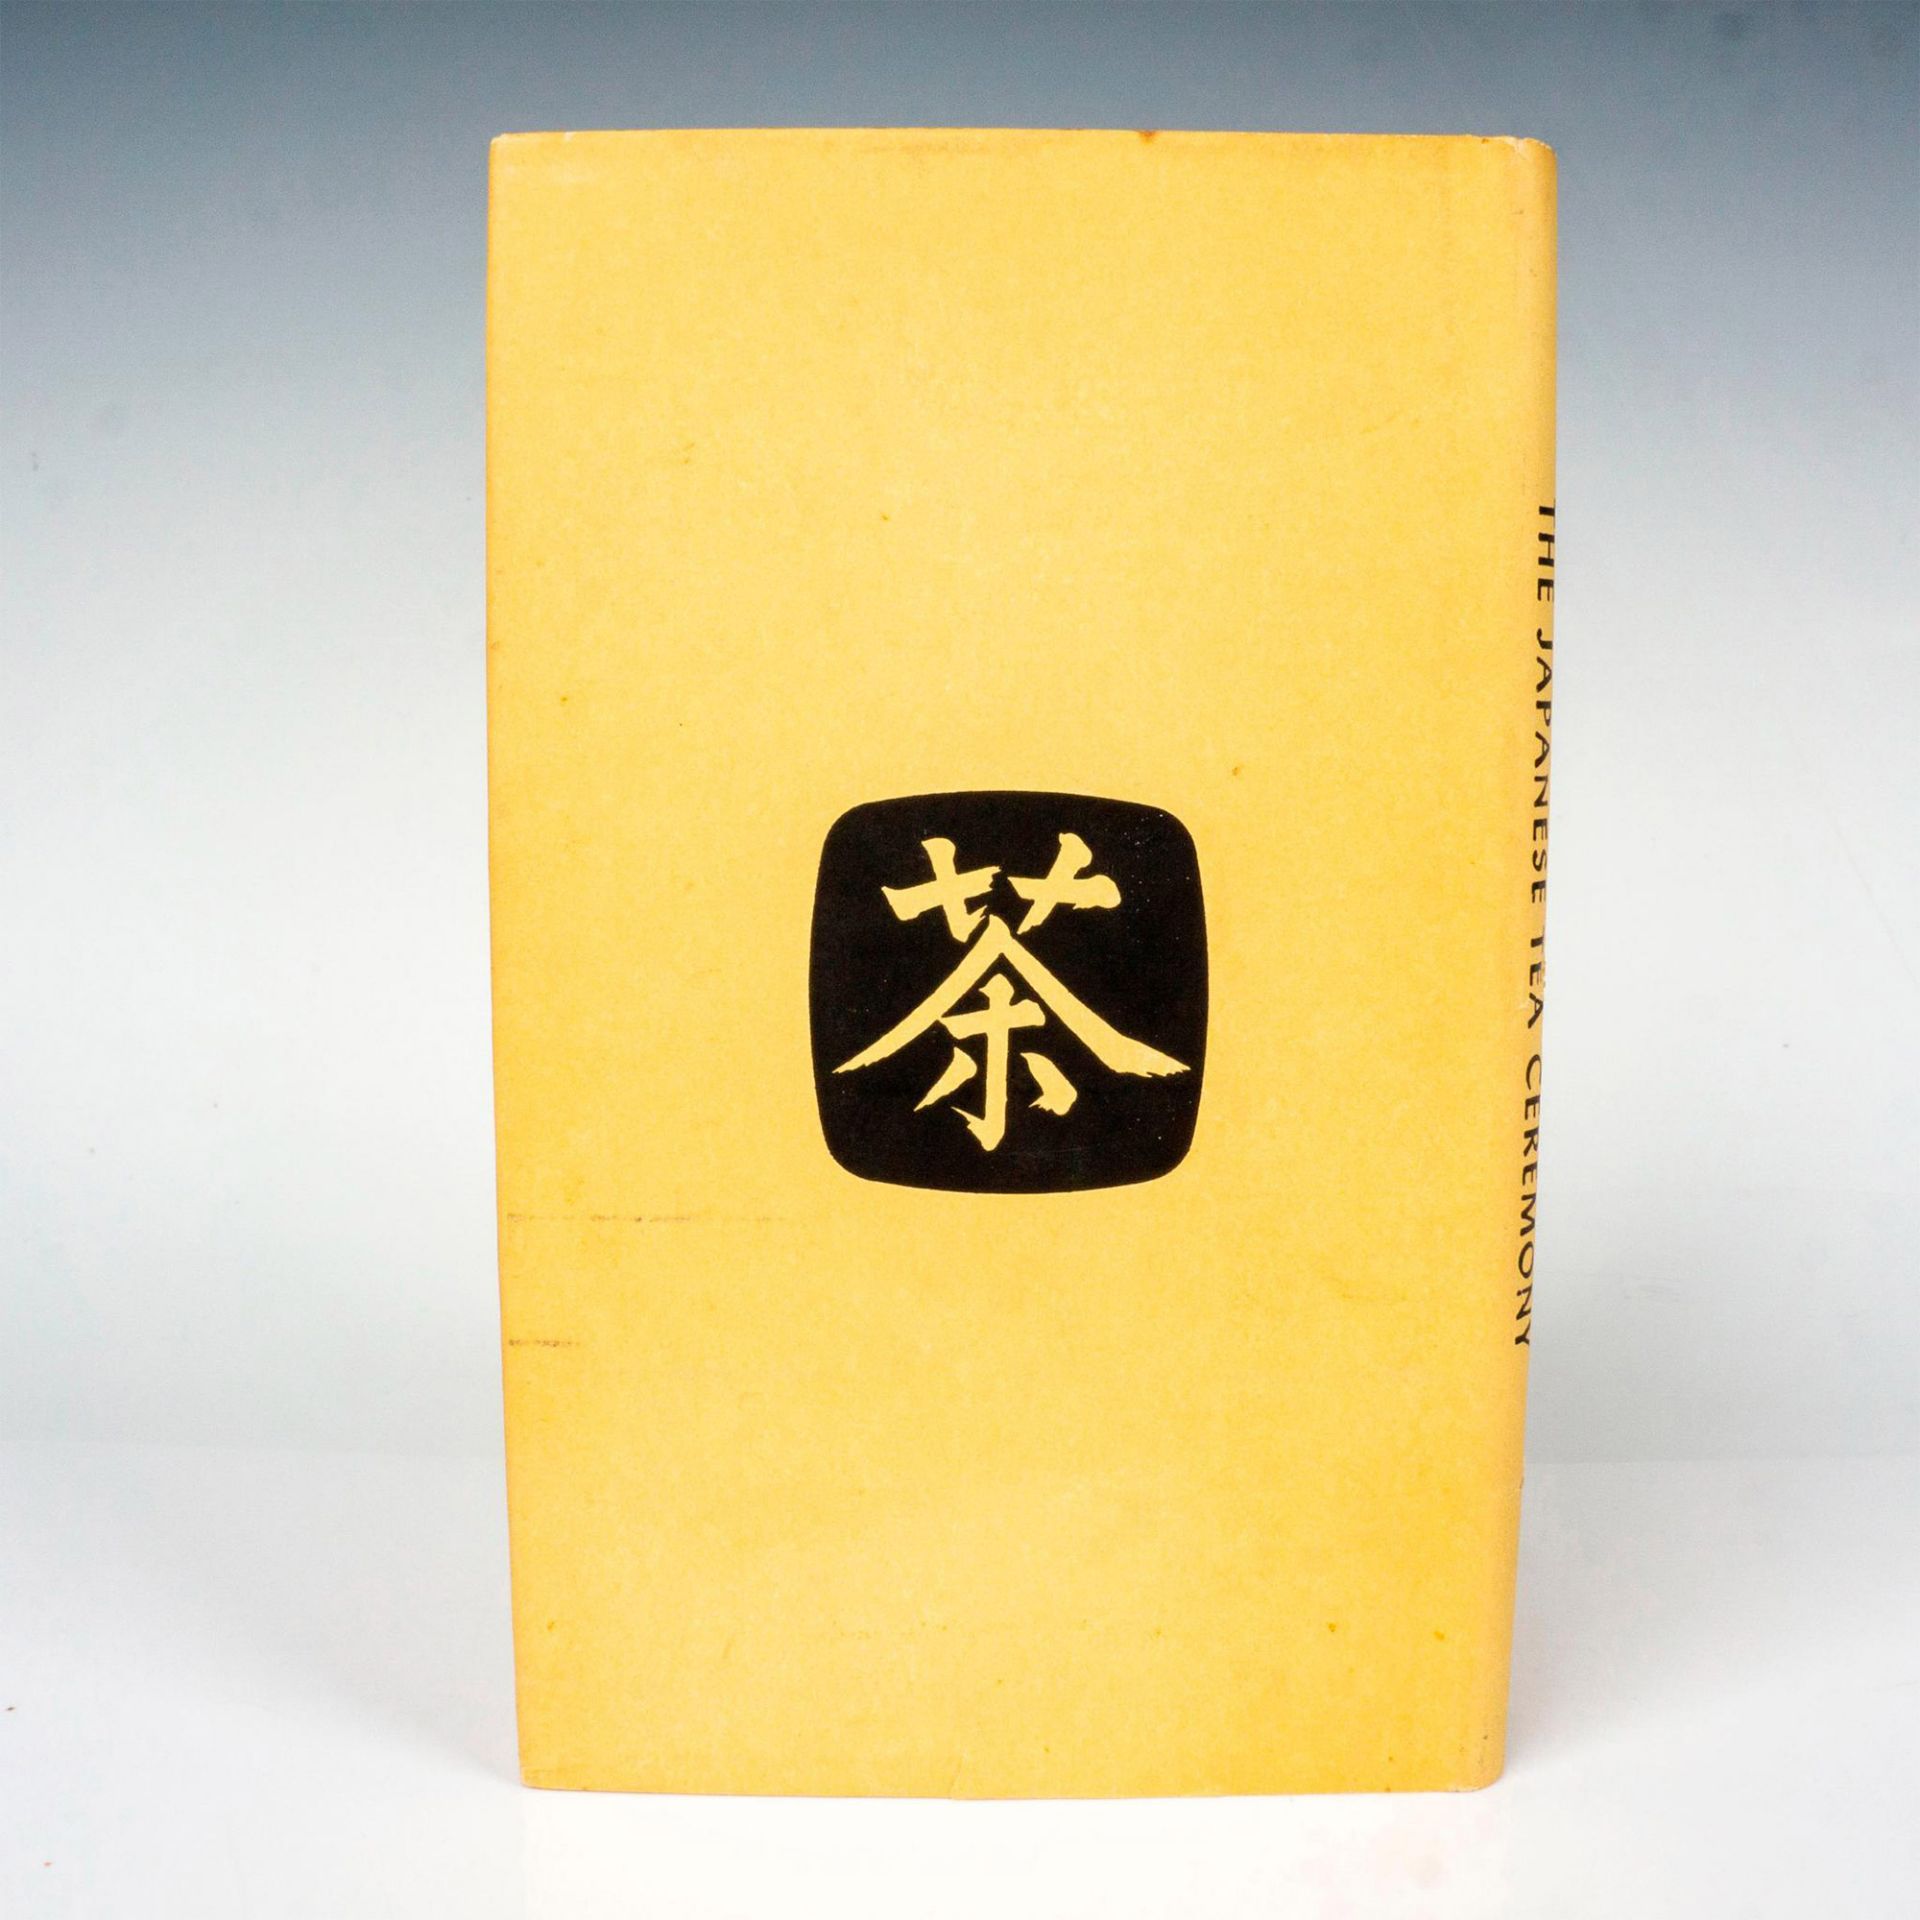 The Japanese Tea Ceremony, Book by Julia V. Nakamura - Image 2 of 2